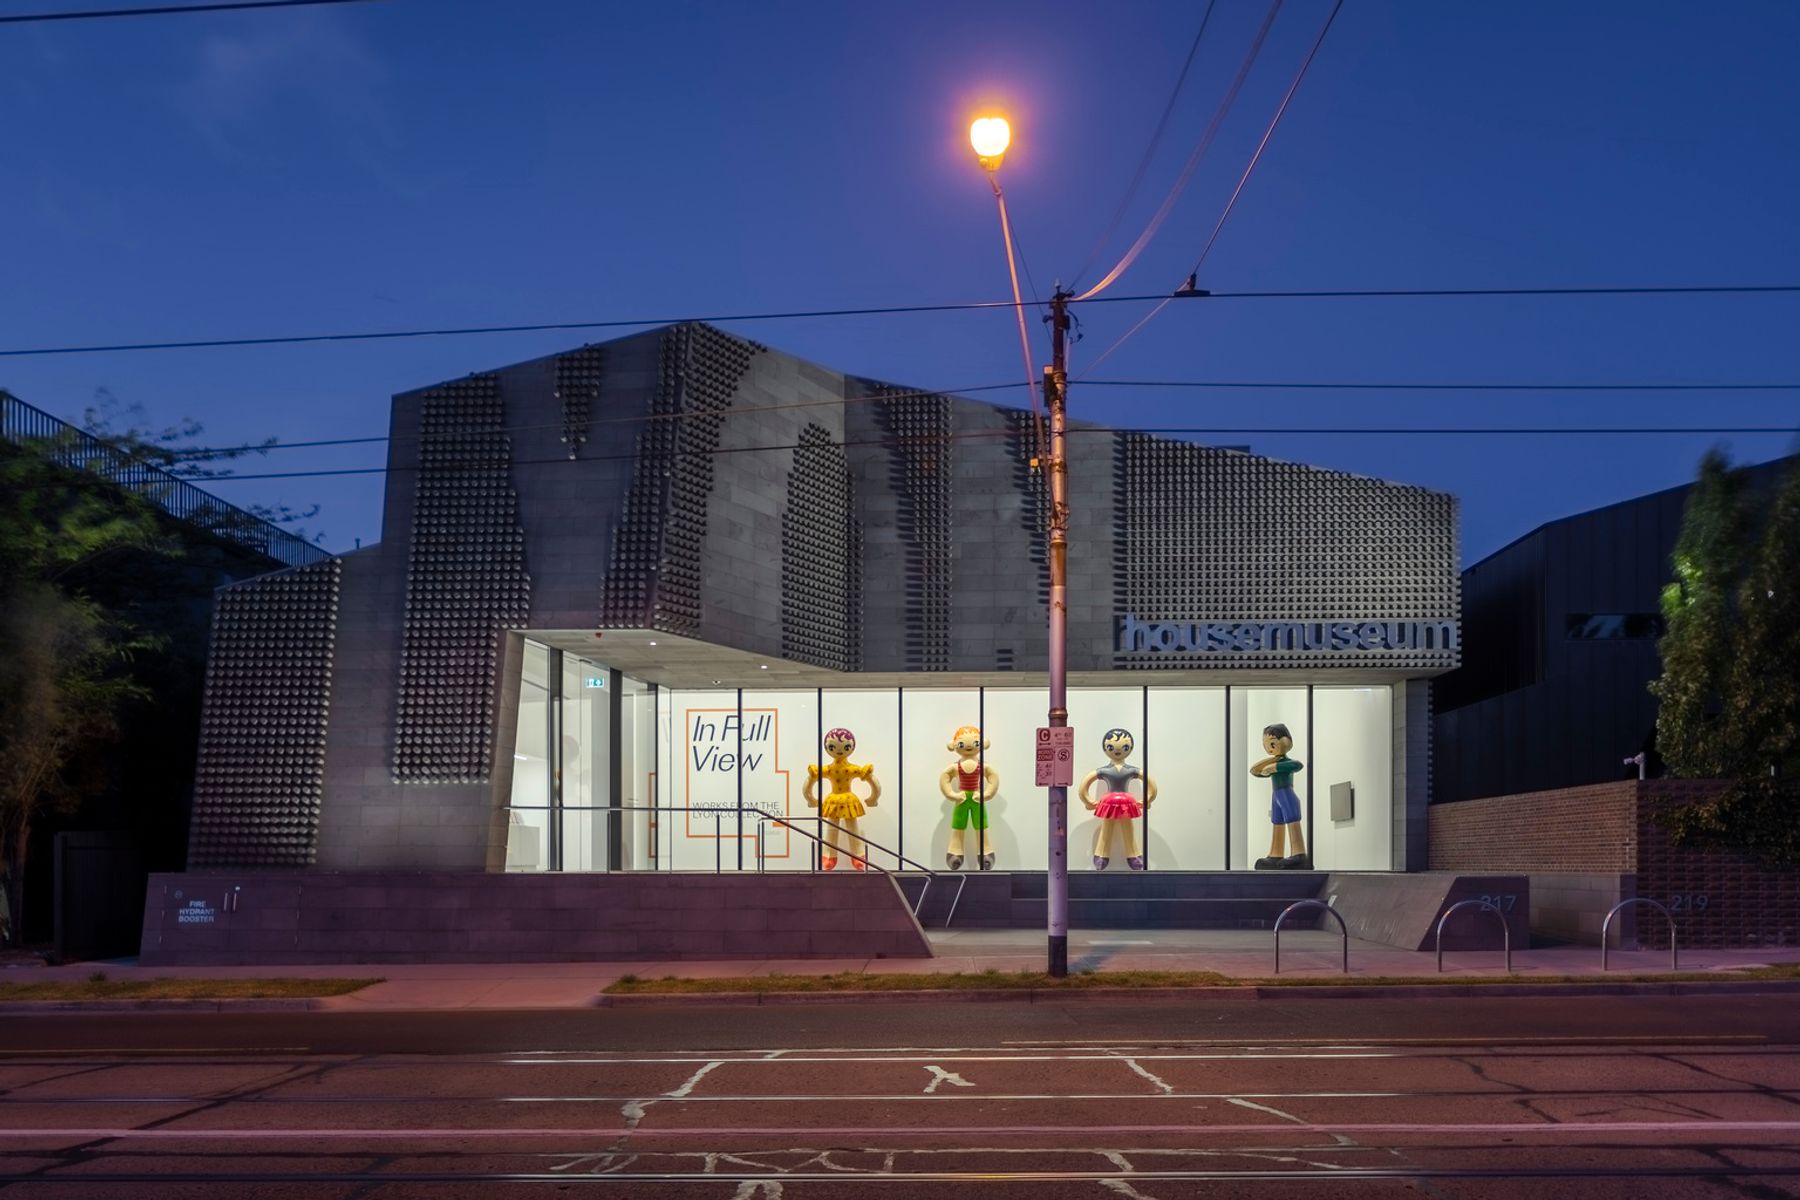 Lyon Housemuseum, Melbourne. Architettura: Lyons Architects. Fotografia: Jackie Chan, Sidney.